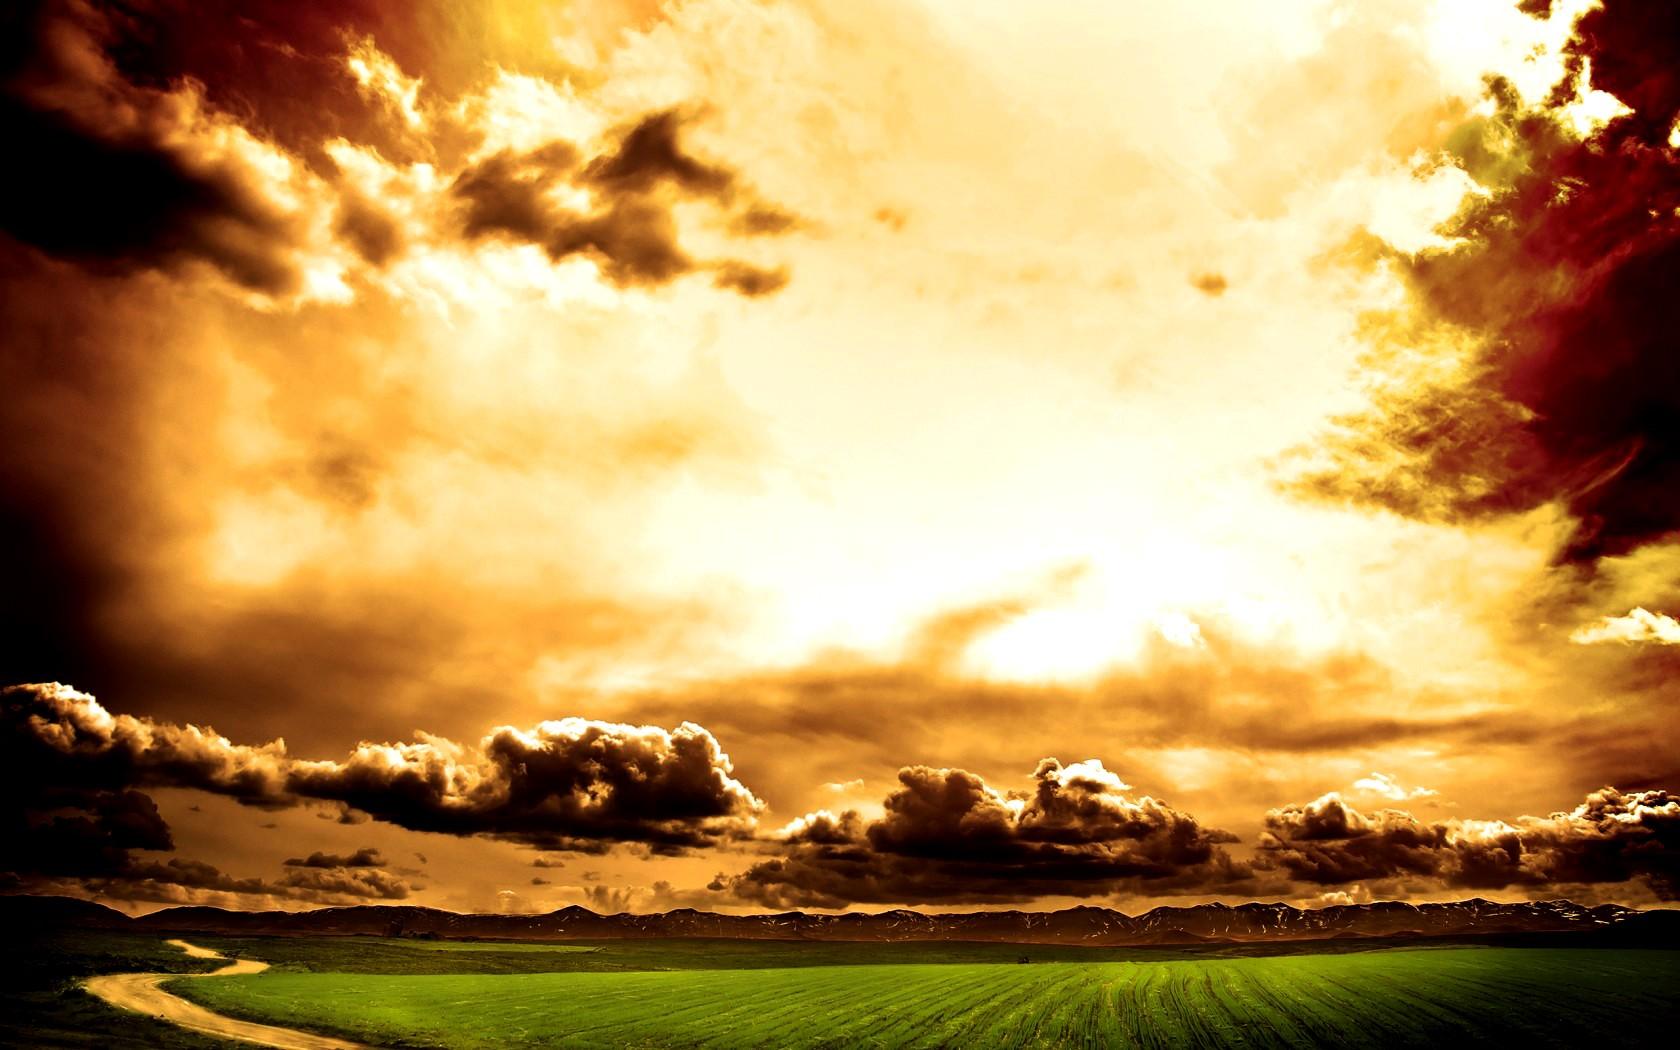 HD Nature Wallpaper Landscapes Desktop Image 4k Fresh Air